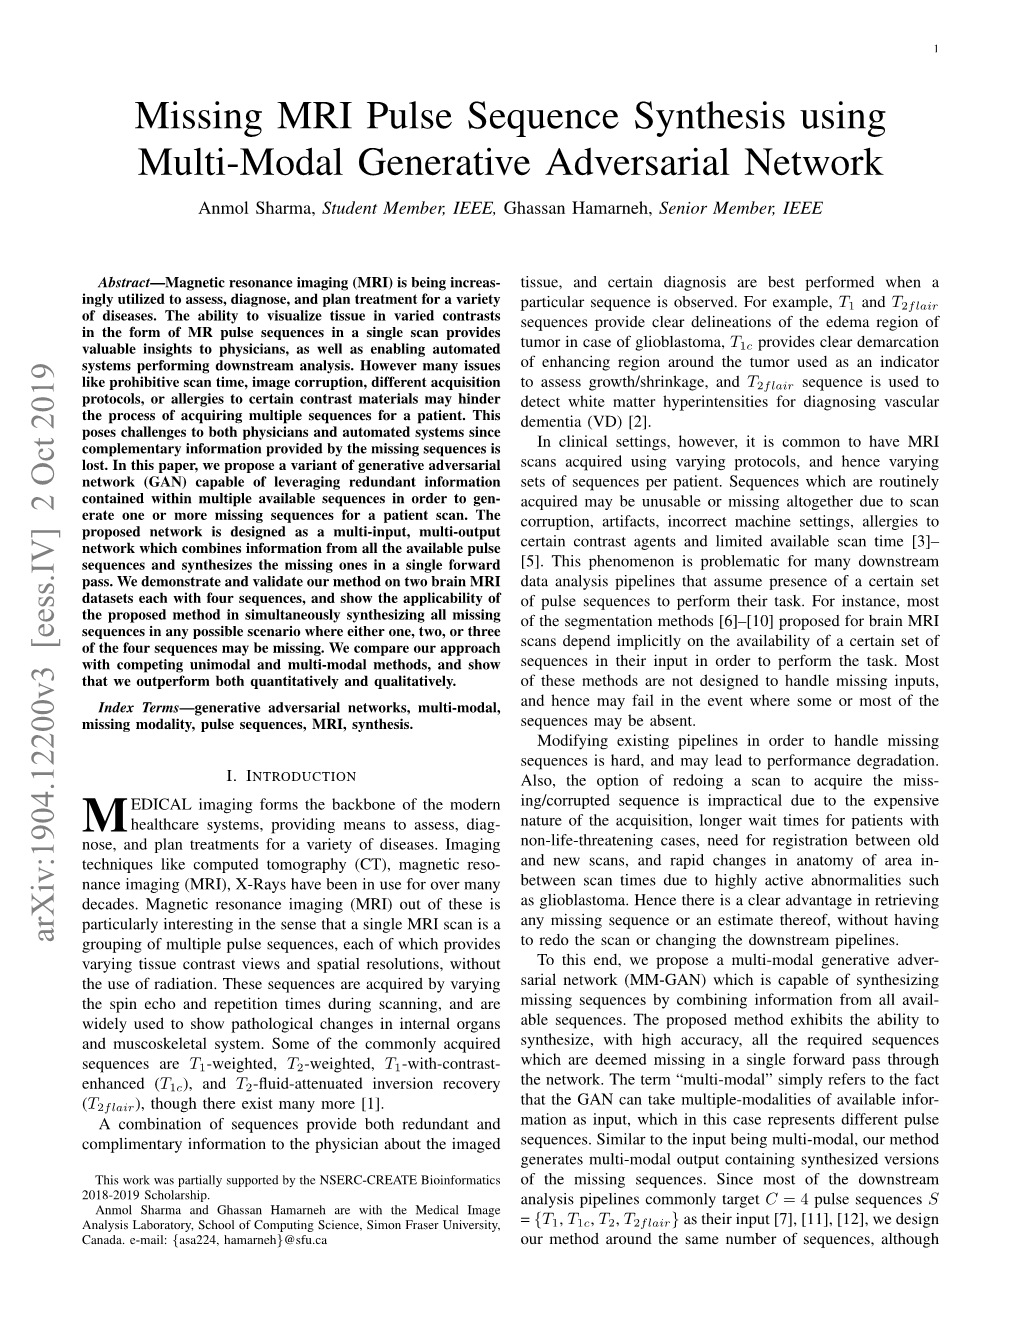 Missing MRI Pulse Sequence Synthesis Using Multi-Modal Generative Adversarial Network Anmol Sharma, Student Member, IEEE, Ghassan Hamarneh, Senior Member, IEEE